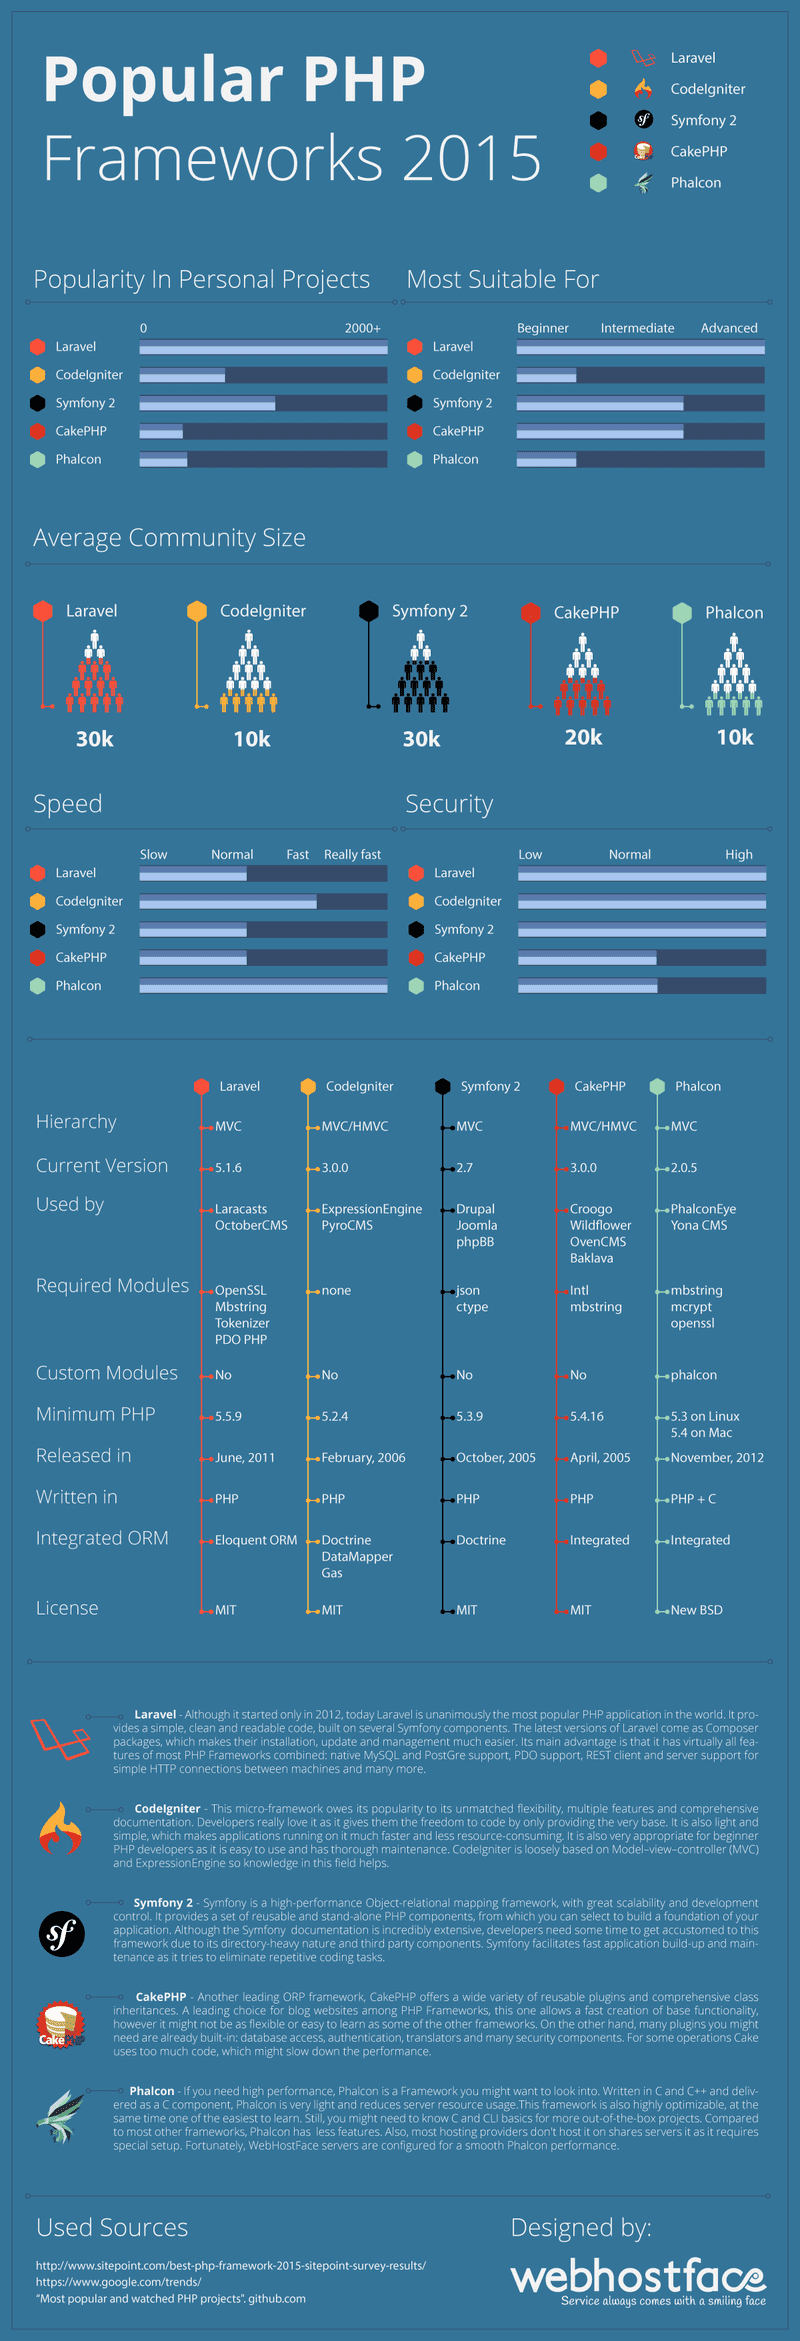 Popular-PHP-Frameworks-2015-Infographic1